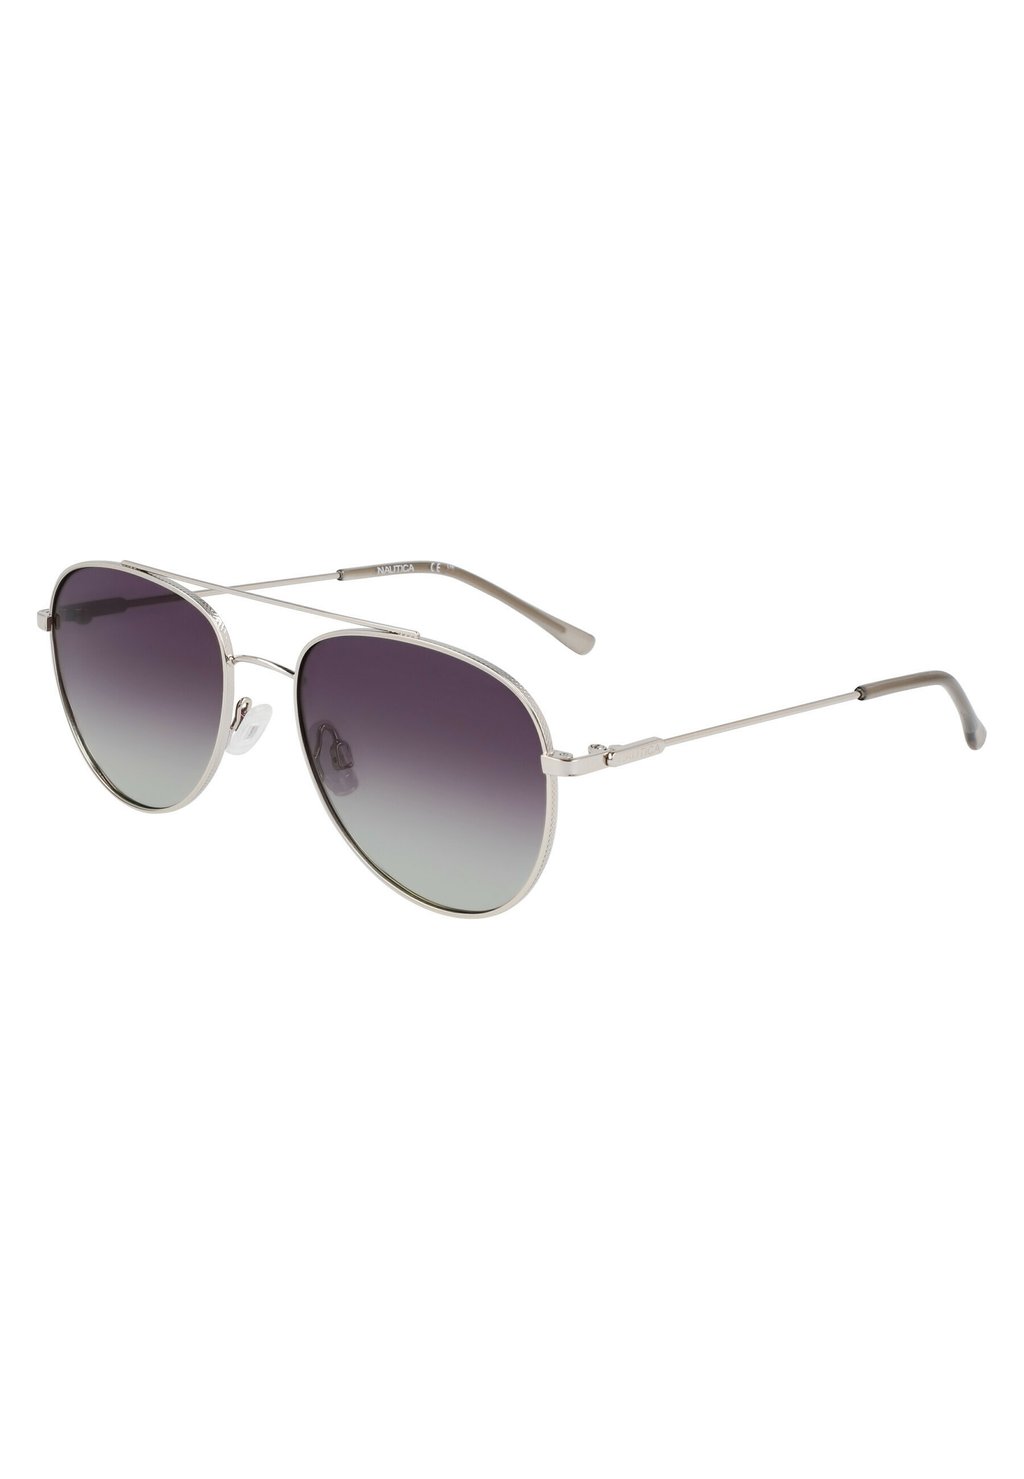 Солнцезащитные очки Nautica, серебристого цвета